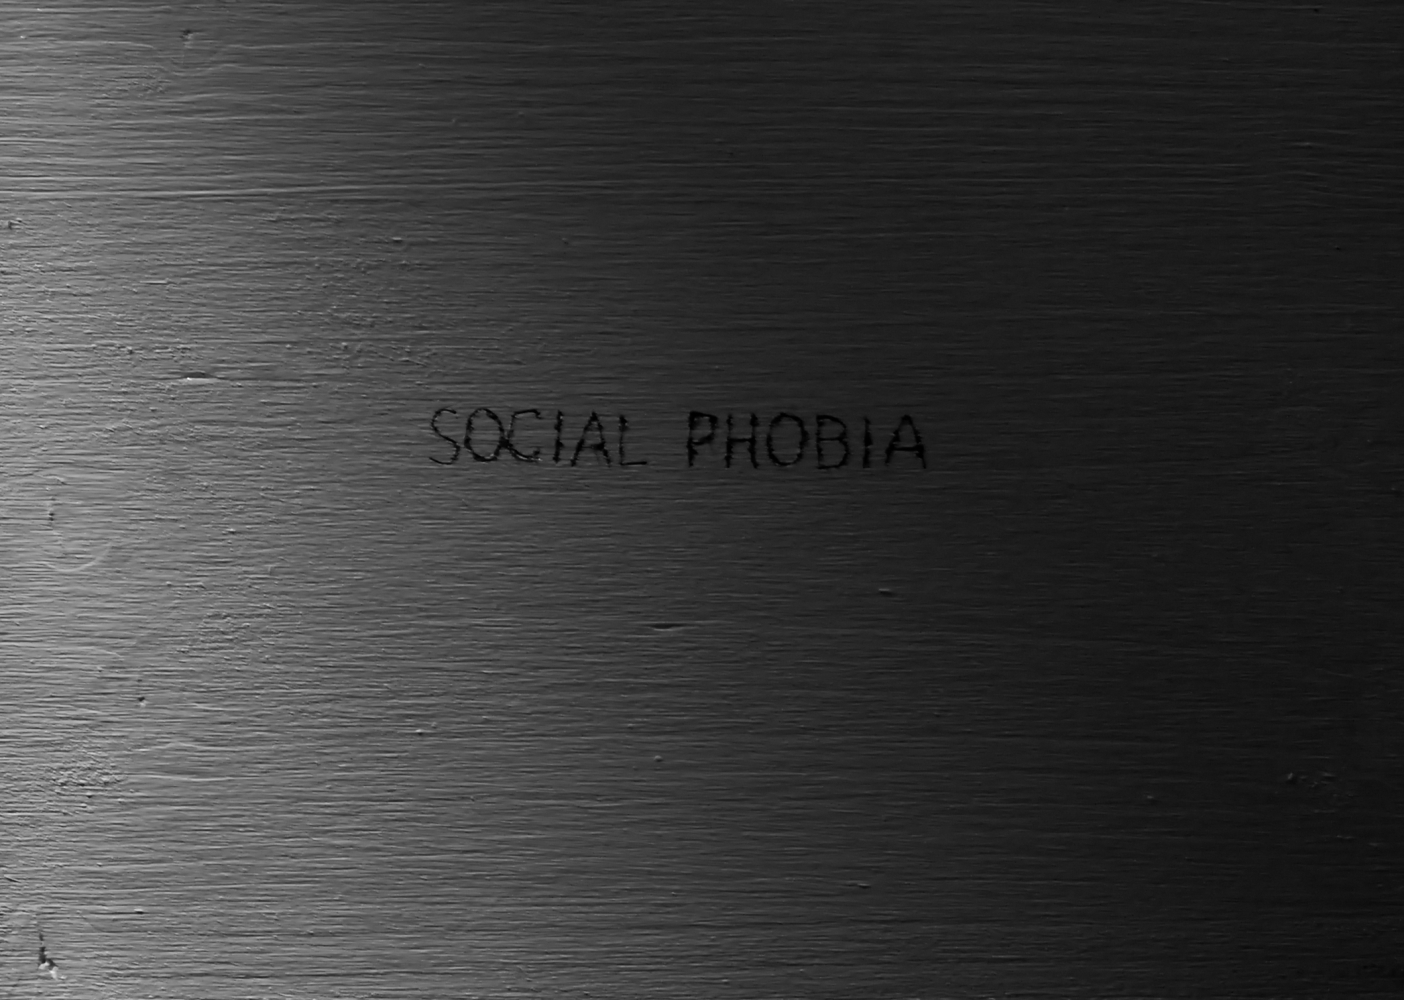 - SOCIAL PHOBIA -